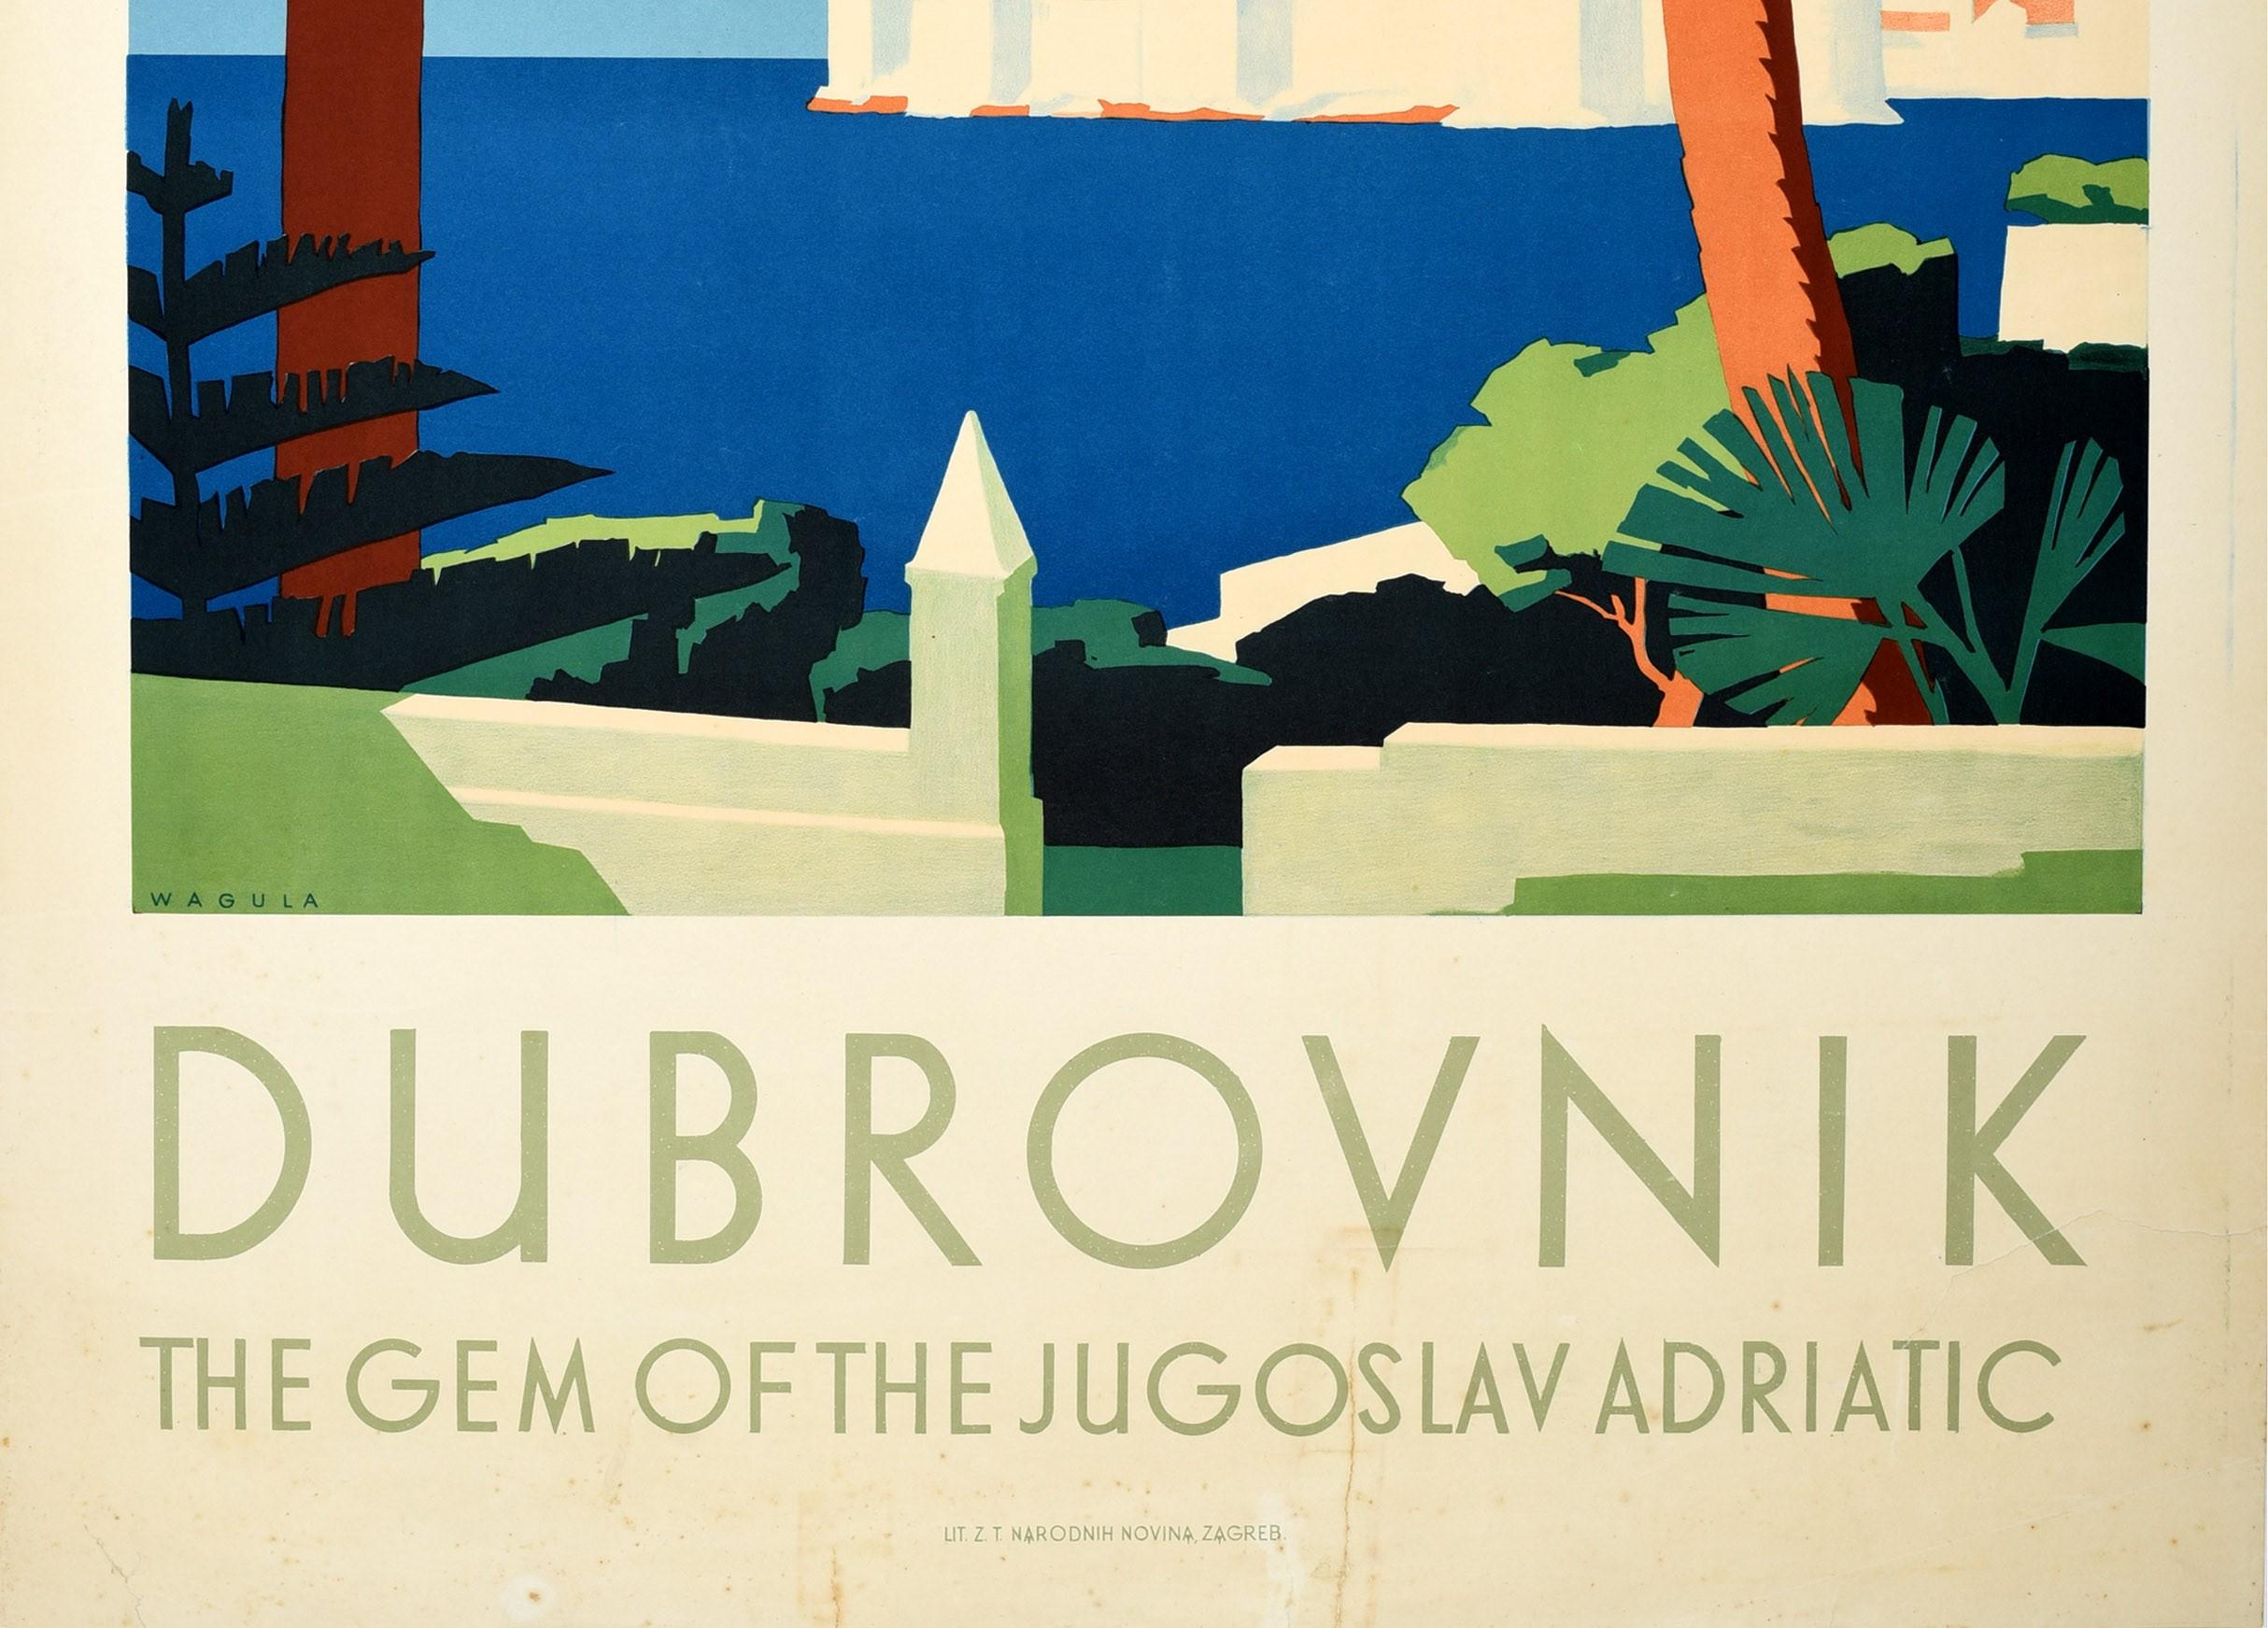 Art Deco Original Vintage Travel Poster Dubrovnik Gem Of The Jugoslav Adriatic Sea City